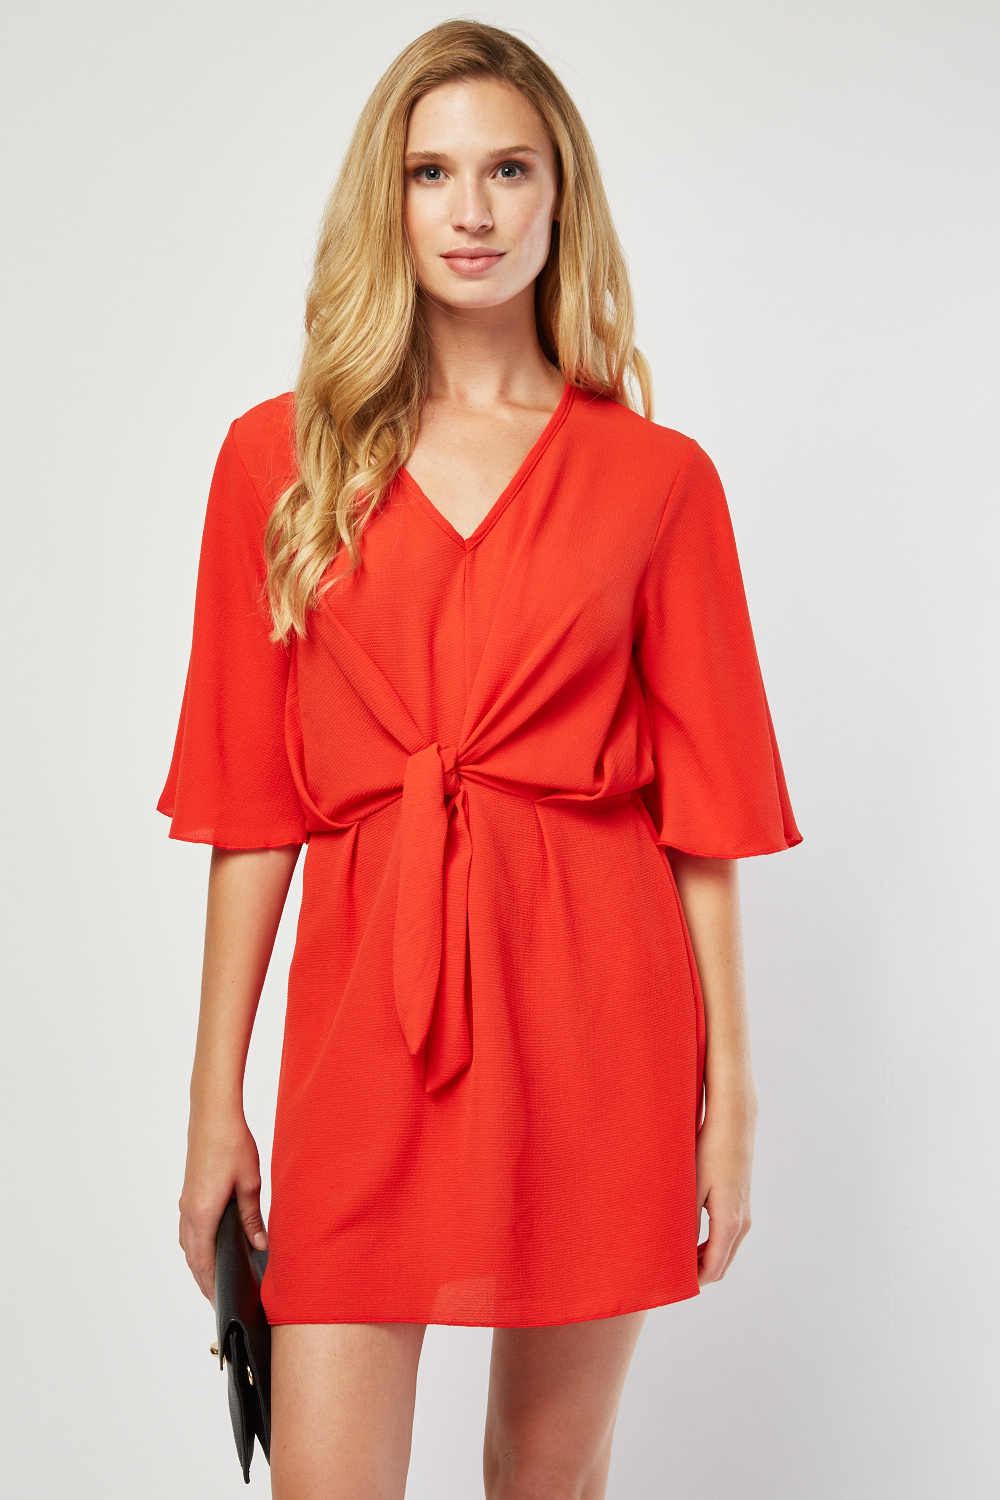 Tie Up Kimono Sleeve Dress - Red - Just £5